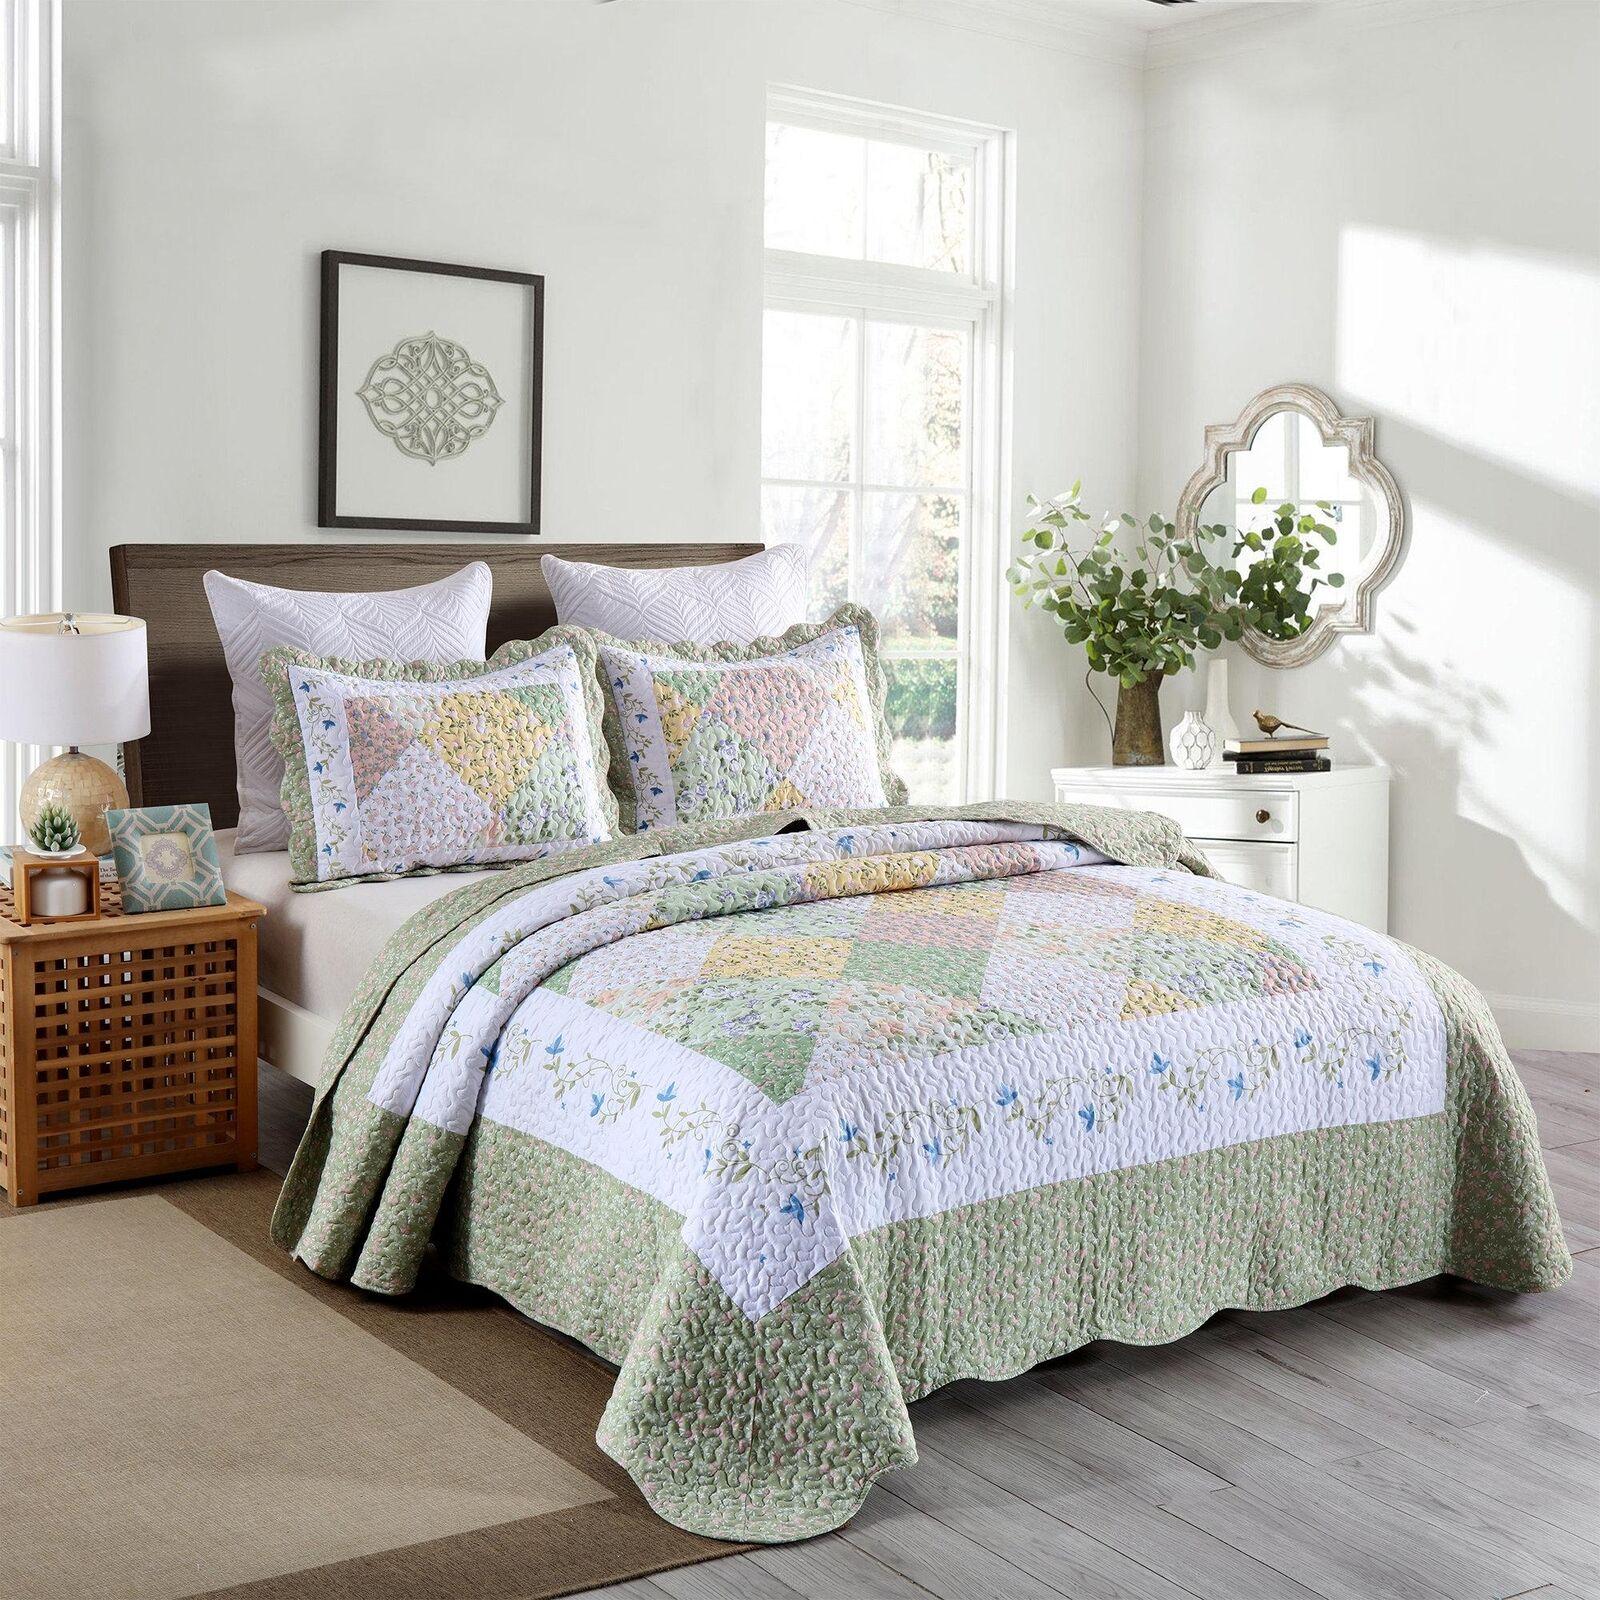 3 Piece Printed Quilt Bedspread Set Bedding Coverlet Set Lily